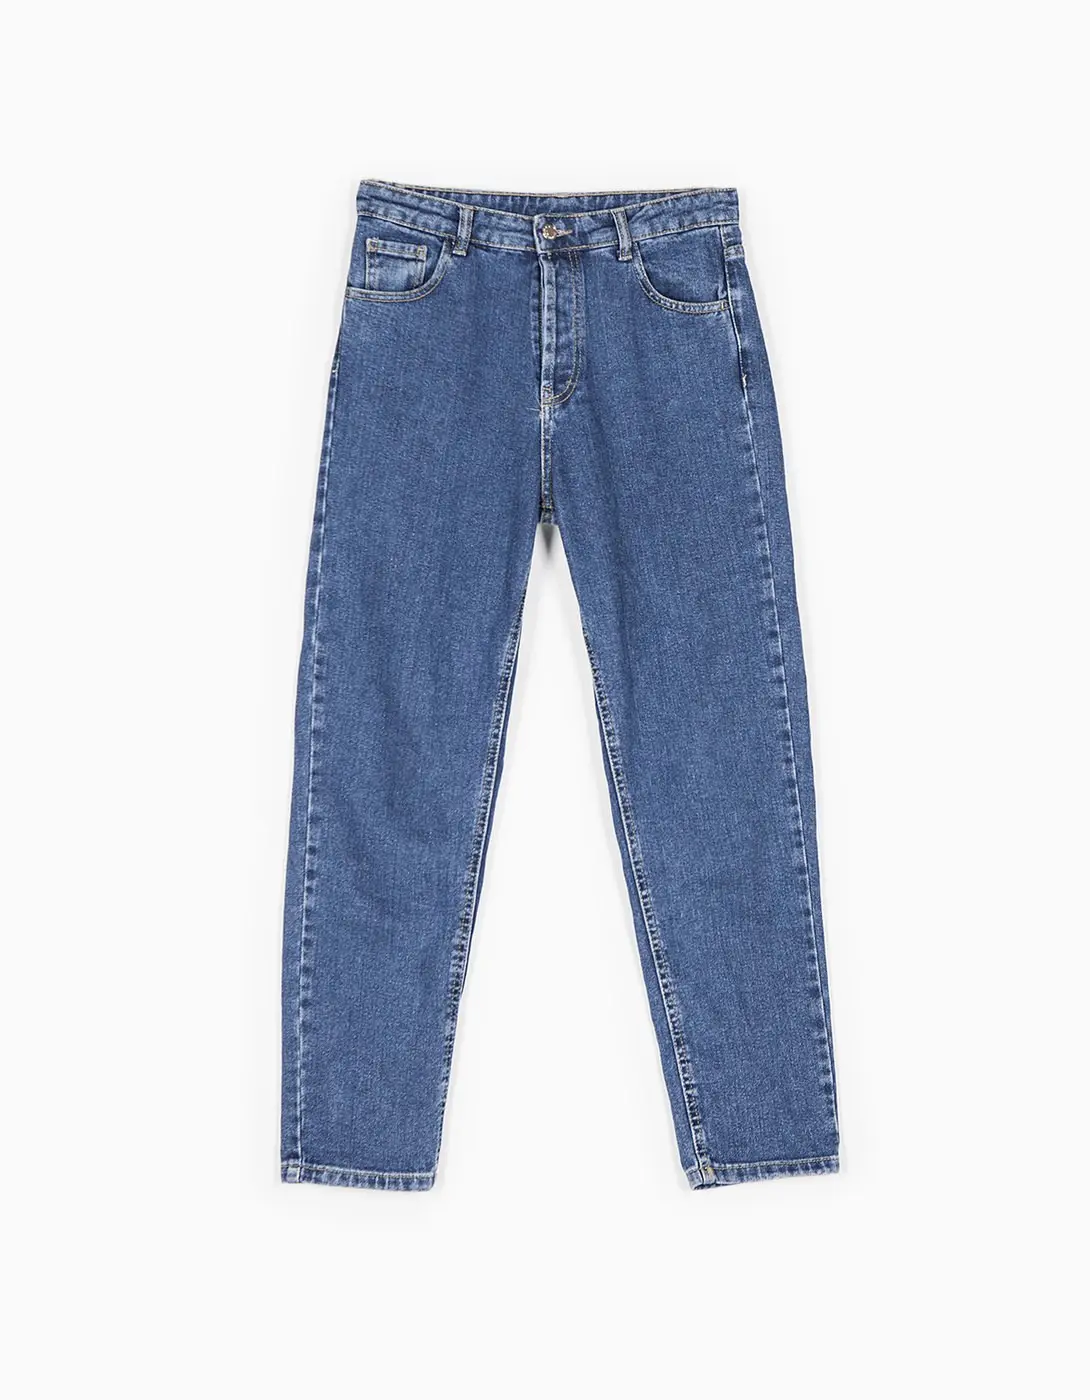 Vintage mom fit jeans, Rp 499.900. (stradivarius.com)